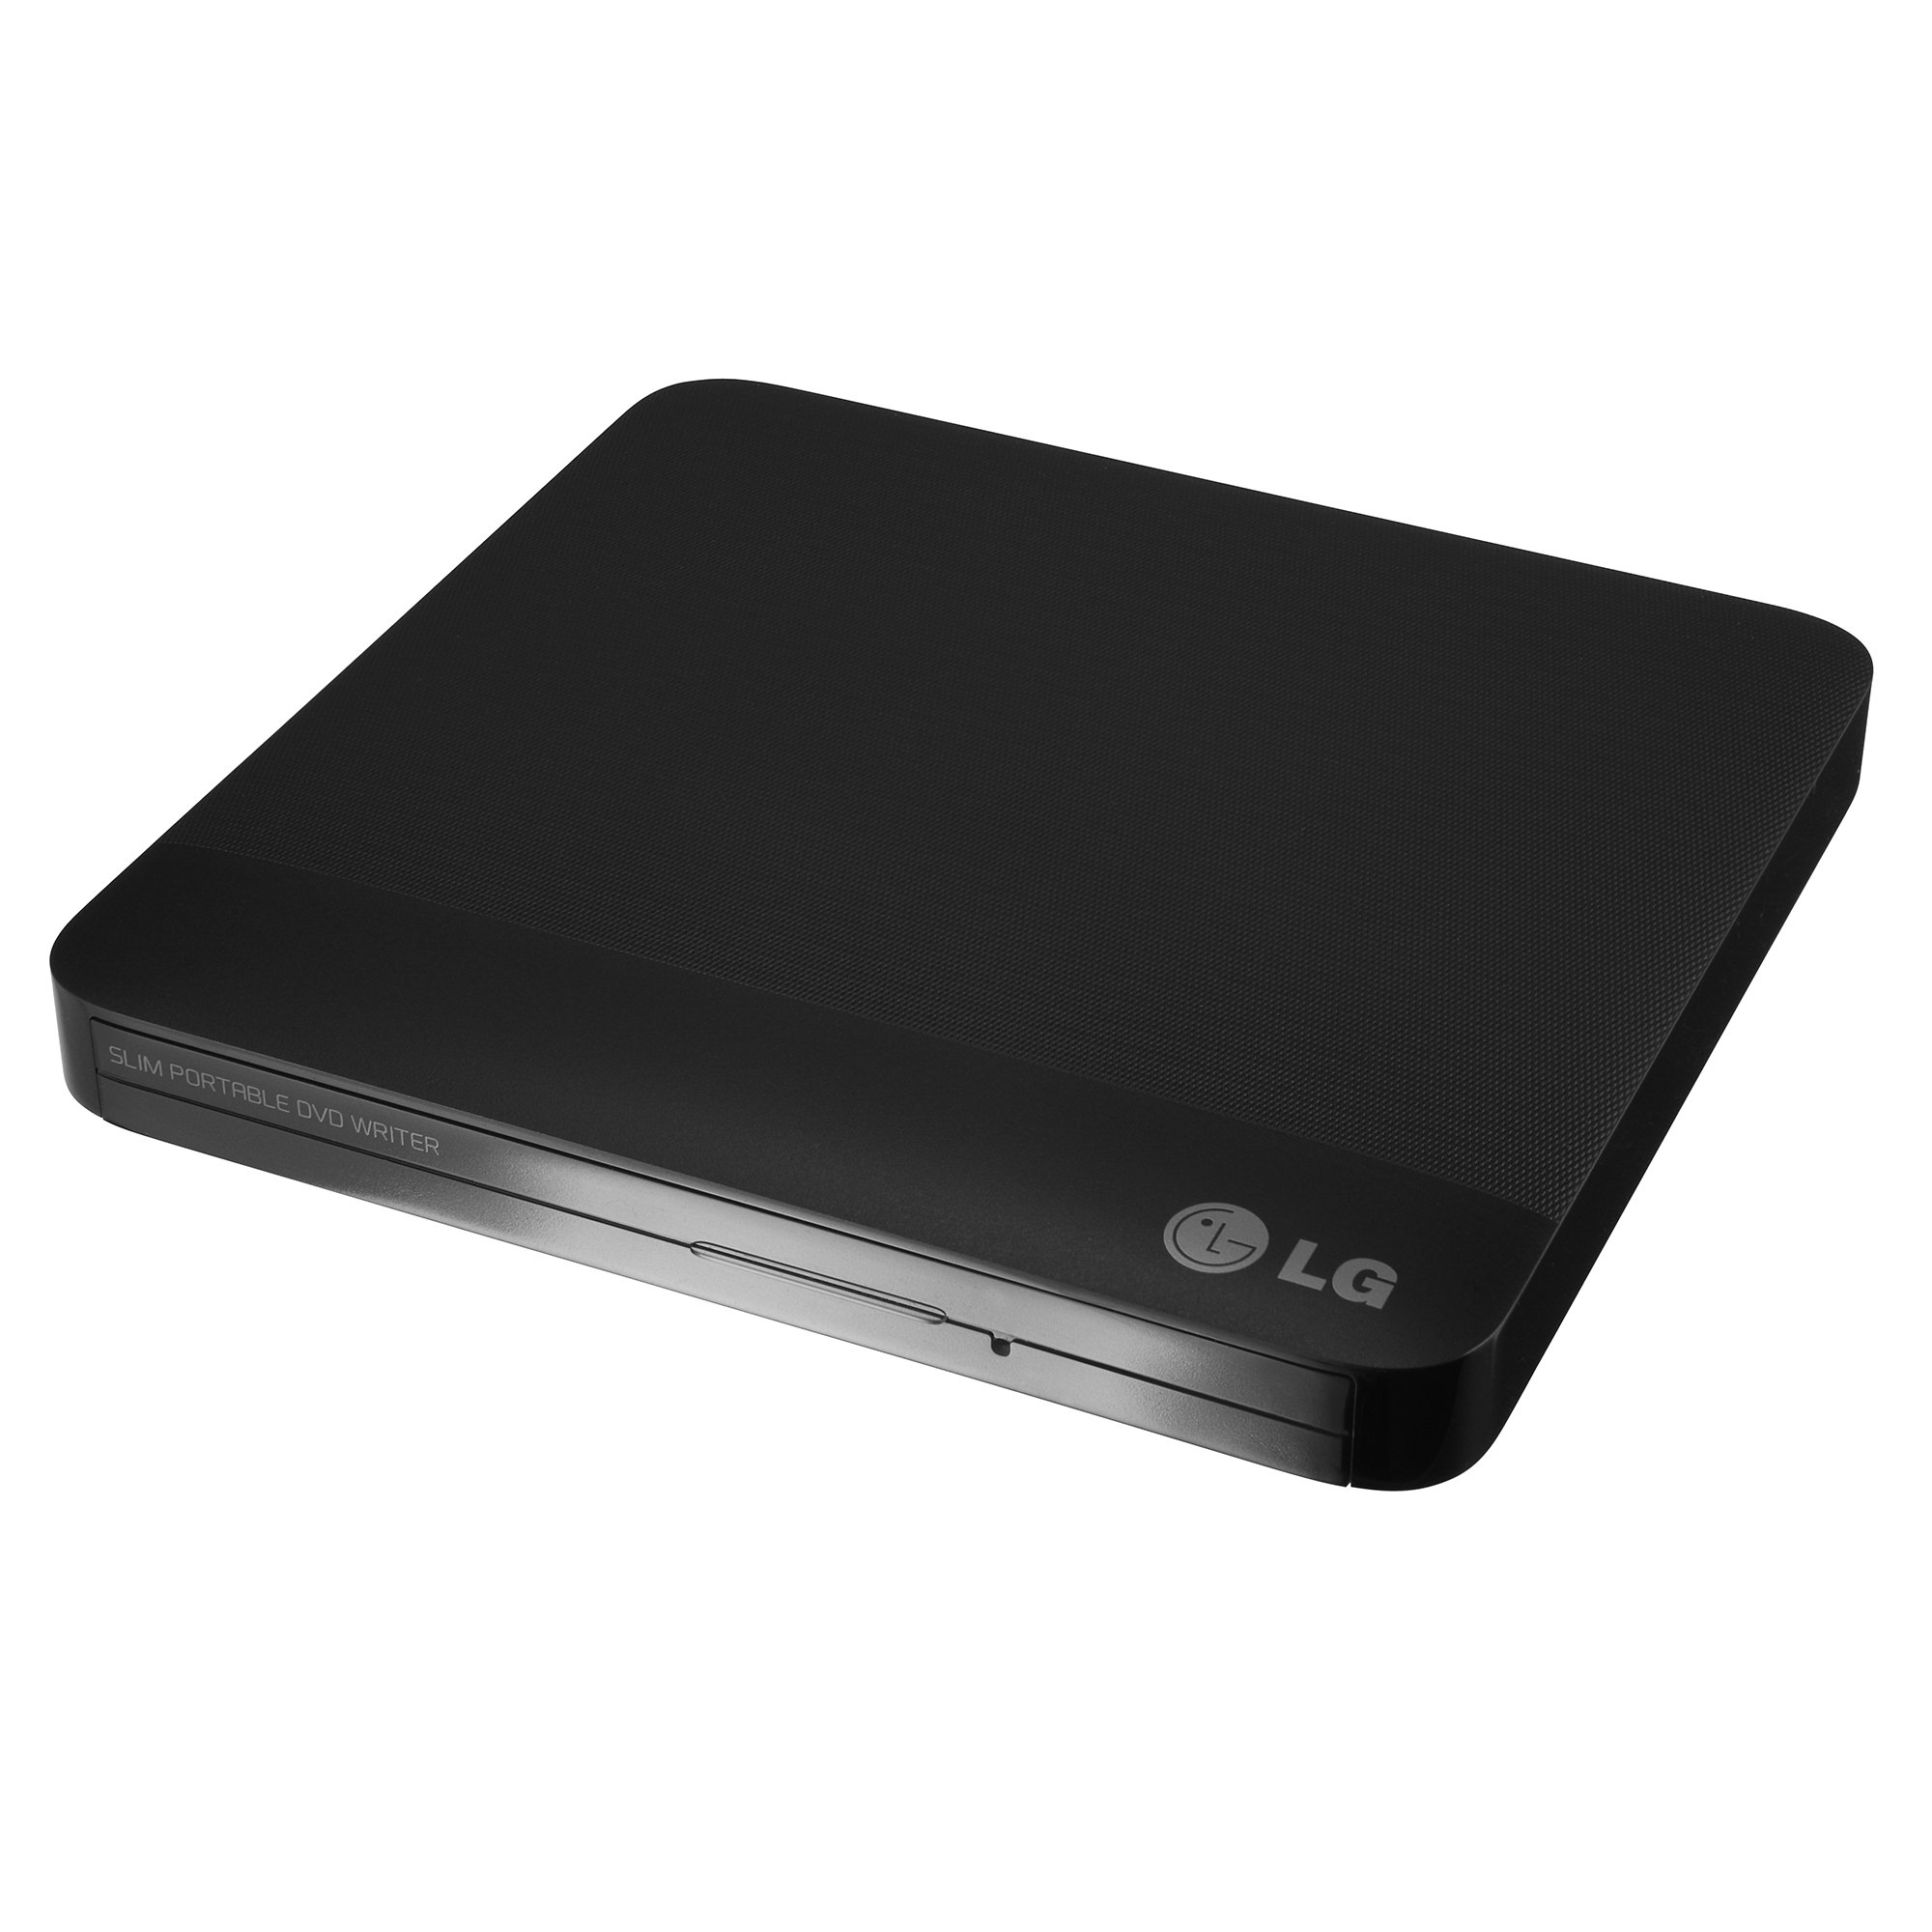 LG Electronics GP50NB40 8X USB 2.0 Slim Portable DVD Rewriter External Drive with M-DISC Support, Black